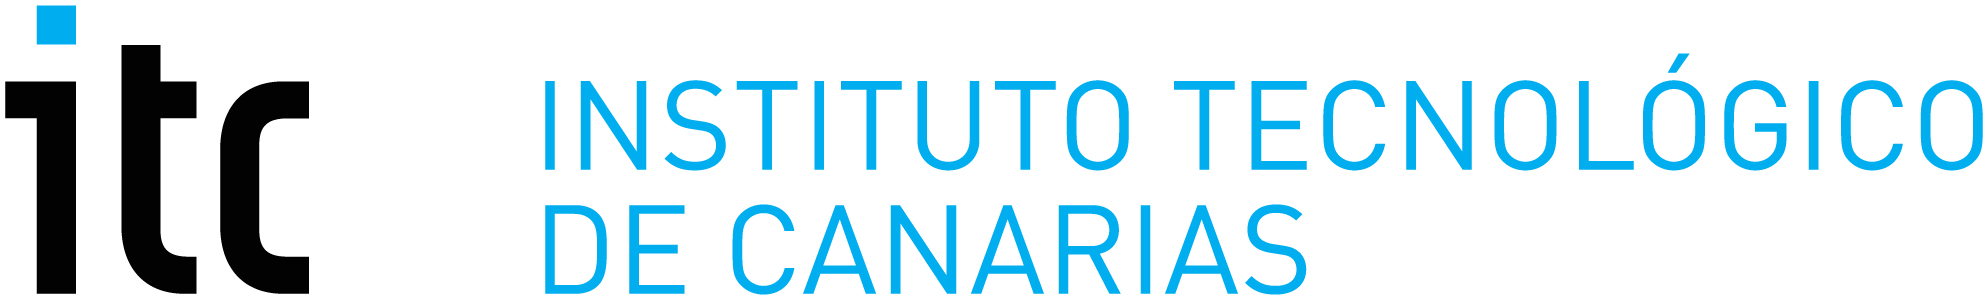 Instituto Tecnológico de Canarias - ITC